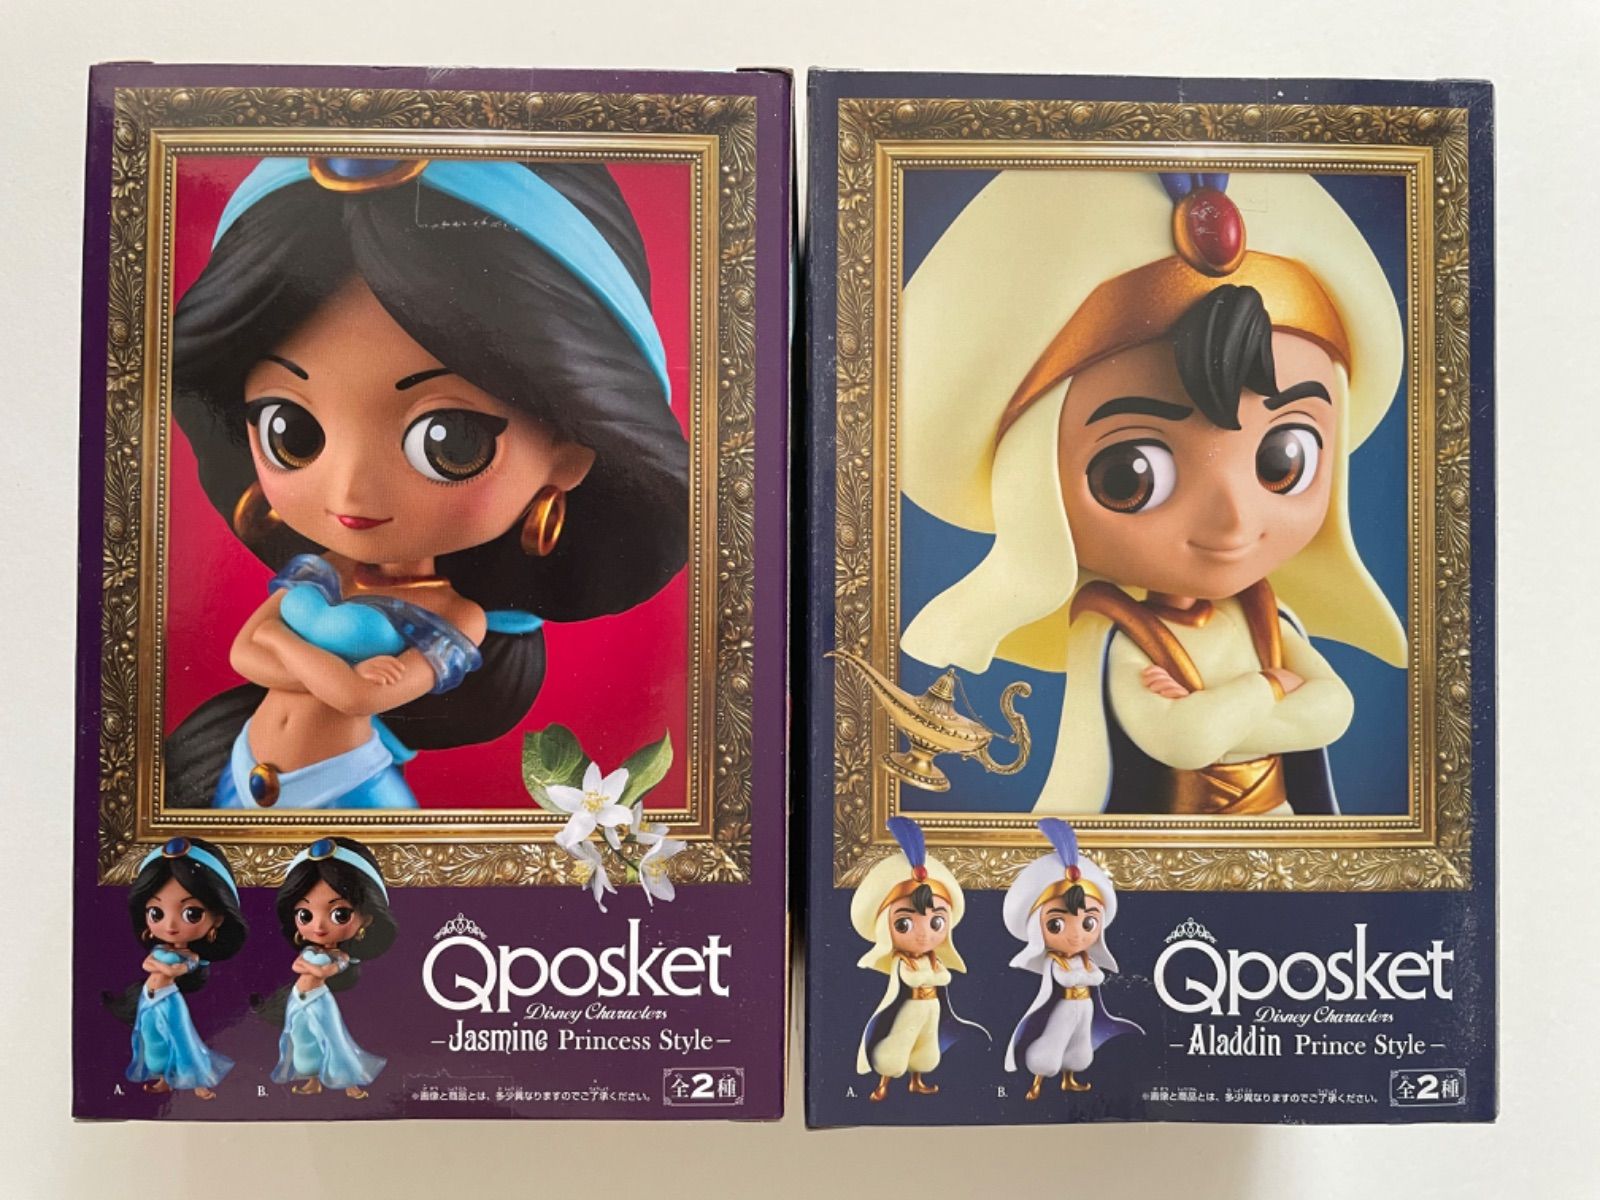 Q posket Disney Characters Aladdin Prince u0026 Jasmine Princess